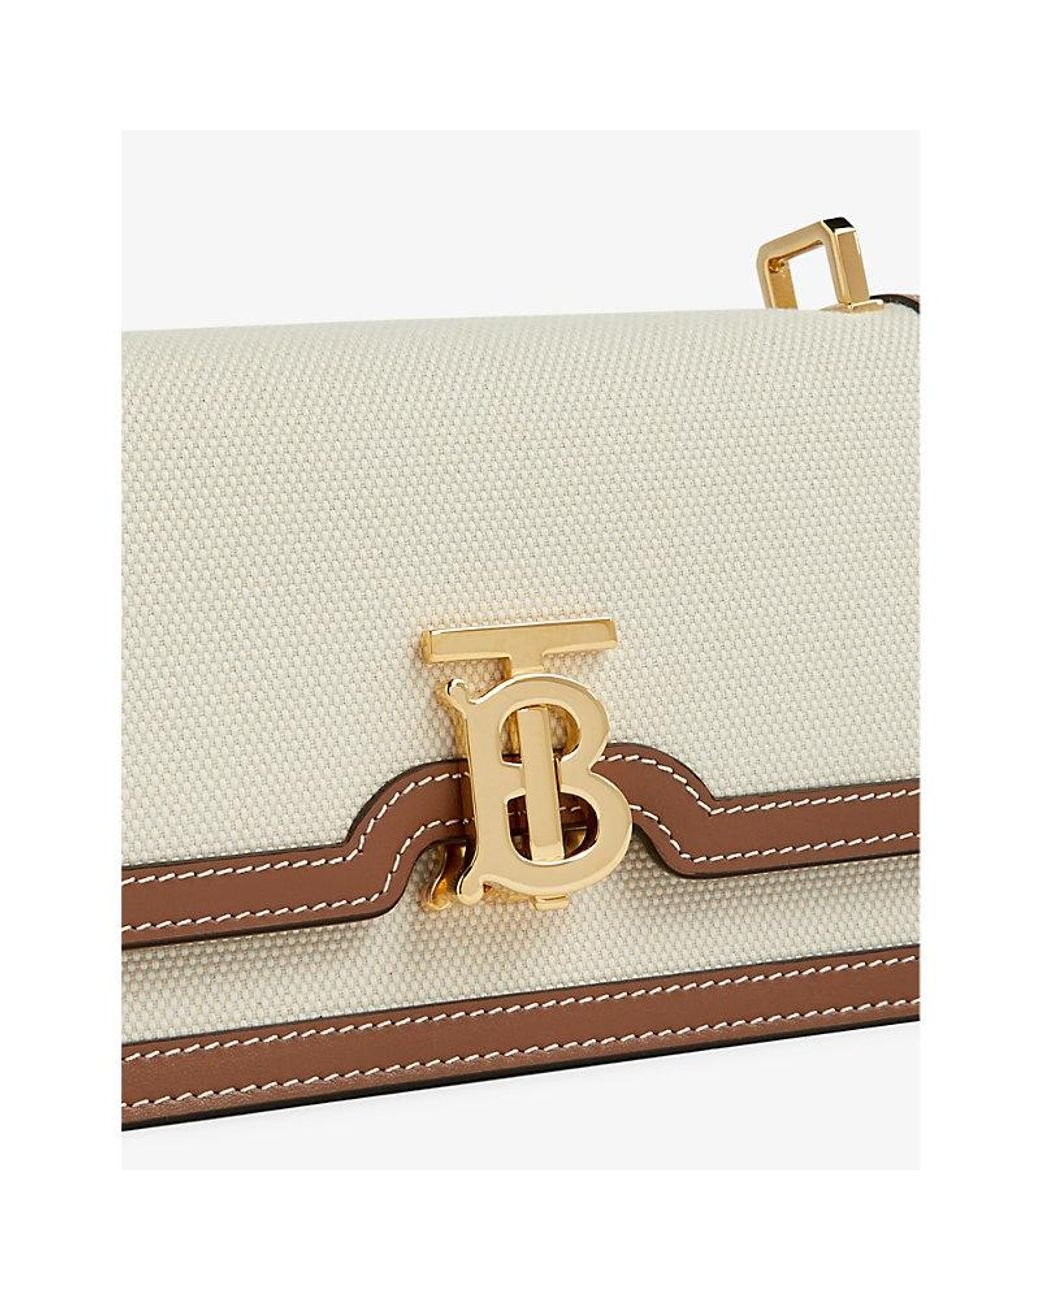 Louis Vuitton, Fendi, Rimowa Latest Tiny Bags Come in Non-Leather